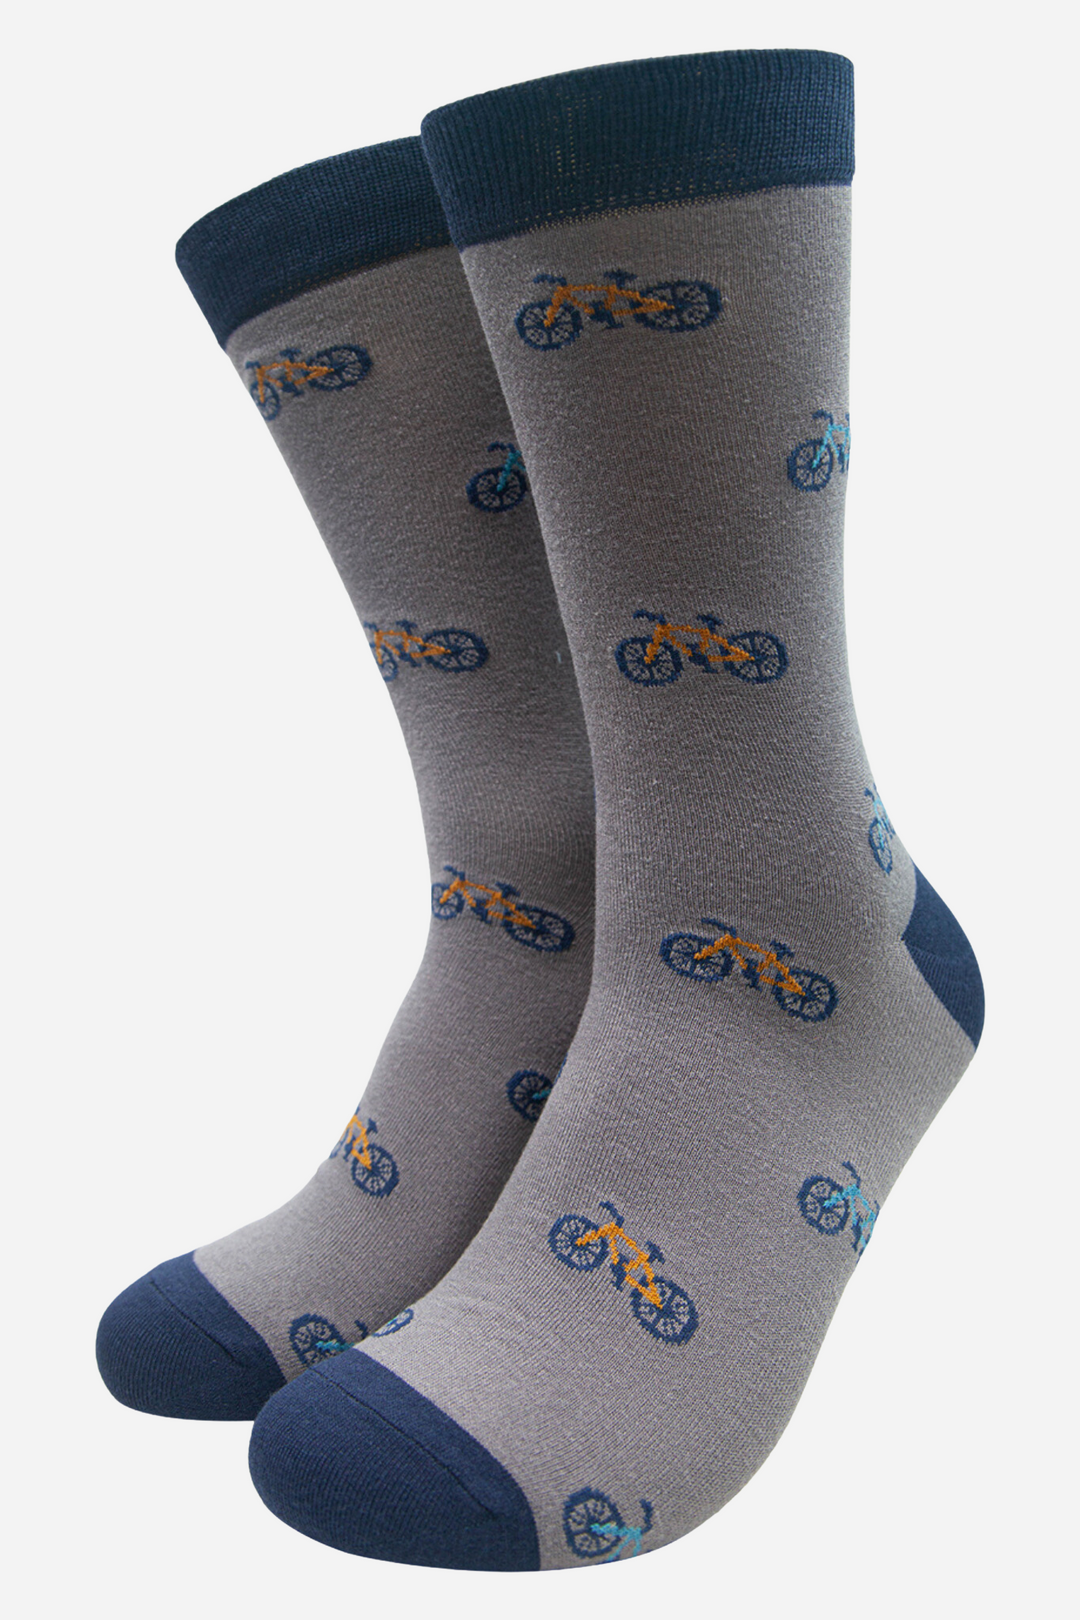 Grey Men's Mountain Bike Print Socks